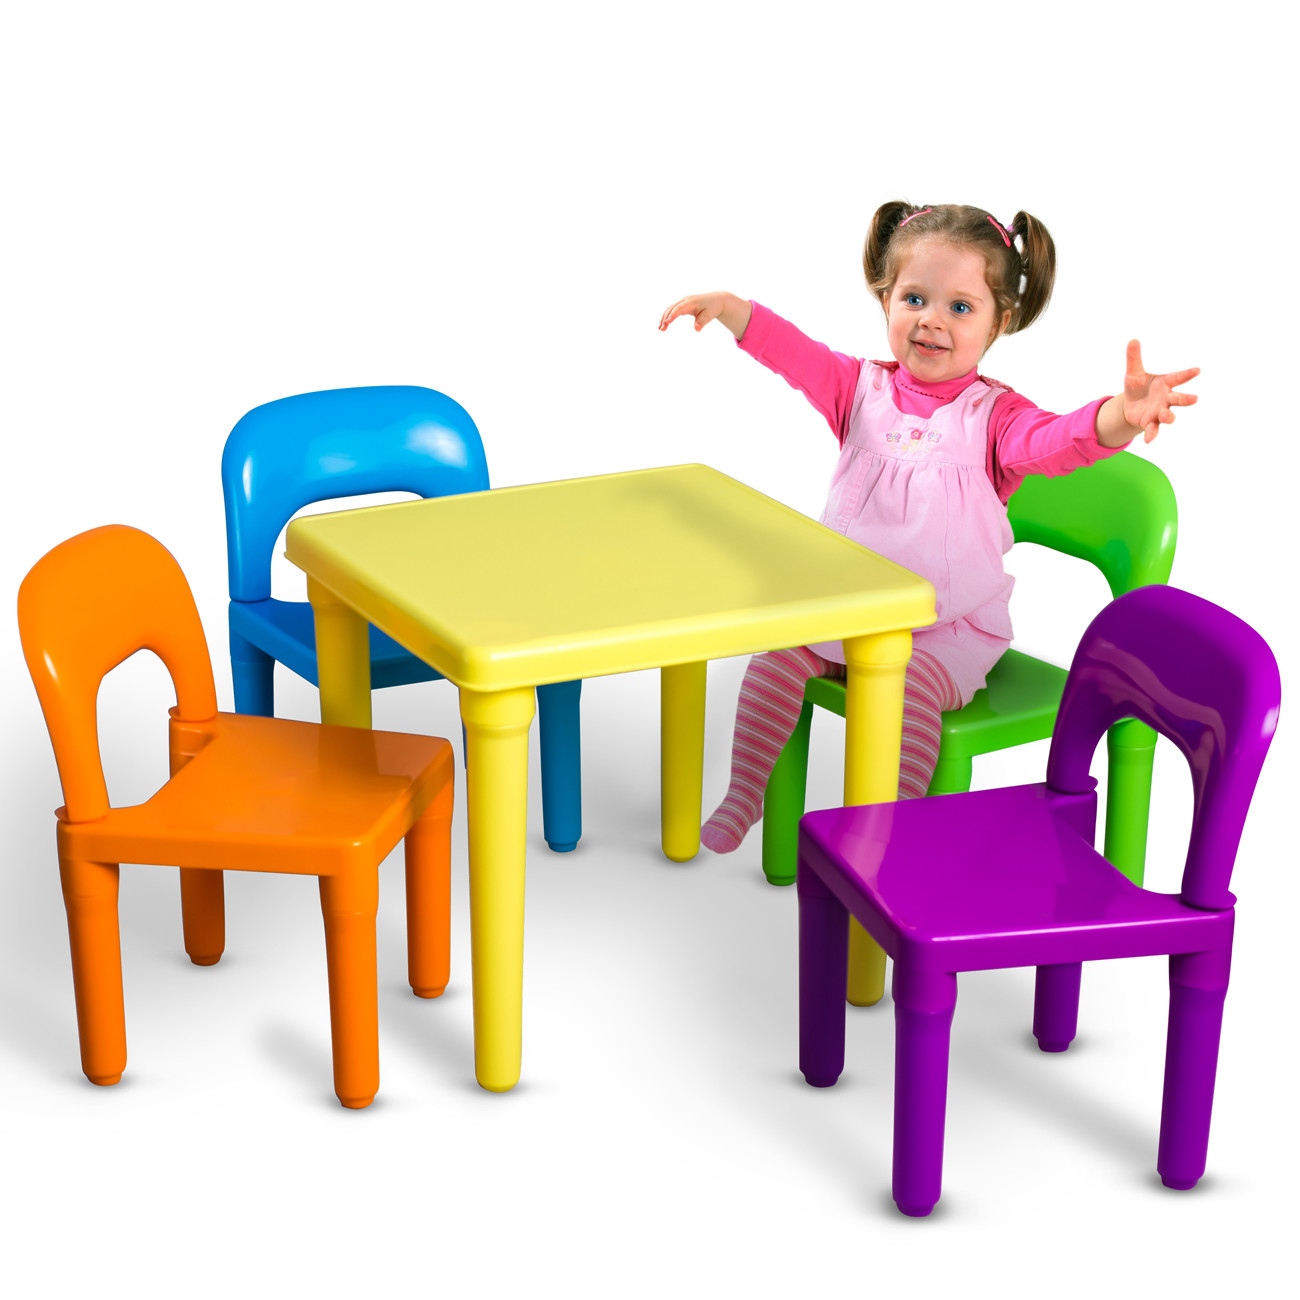 Kids Table And Chairs
 Kids Table and Chairs Play Set Toddler Child Toy Activity